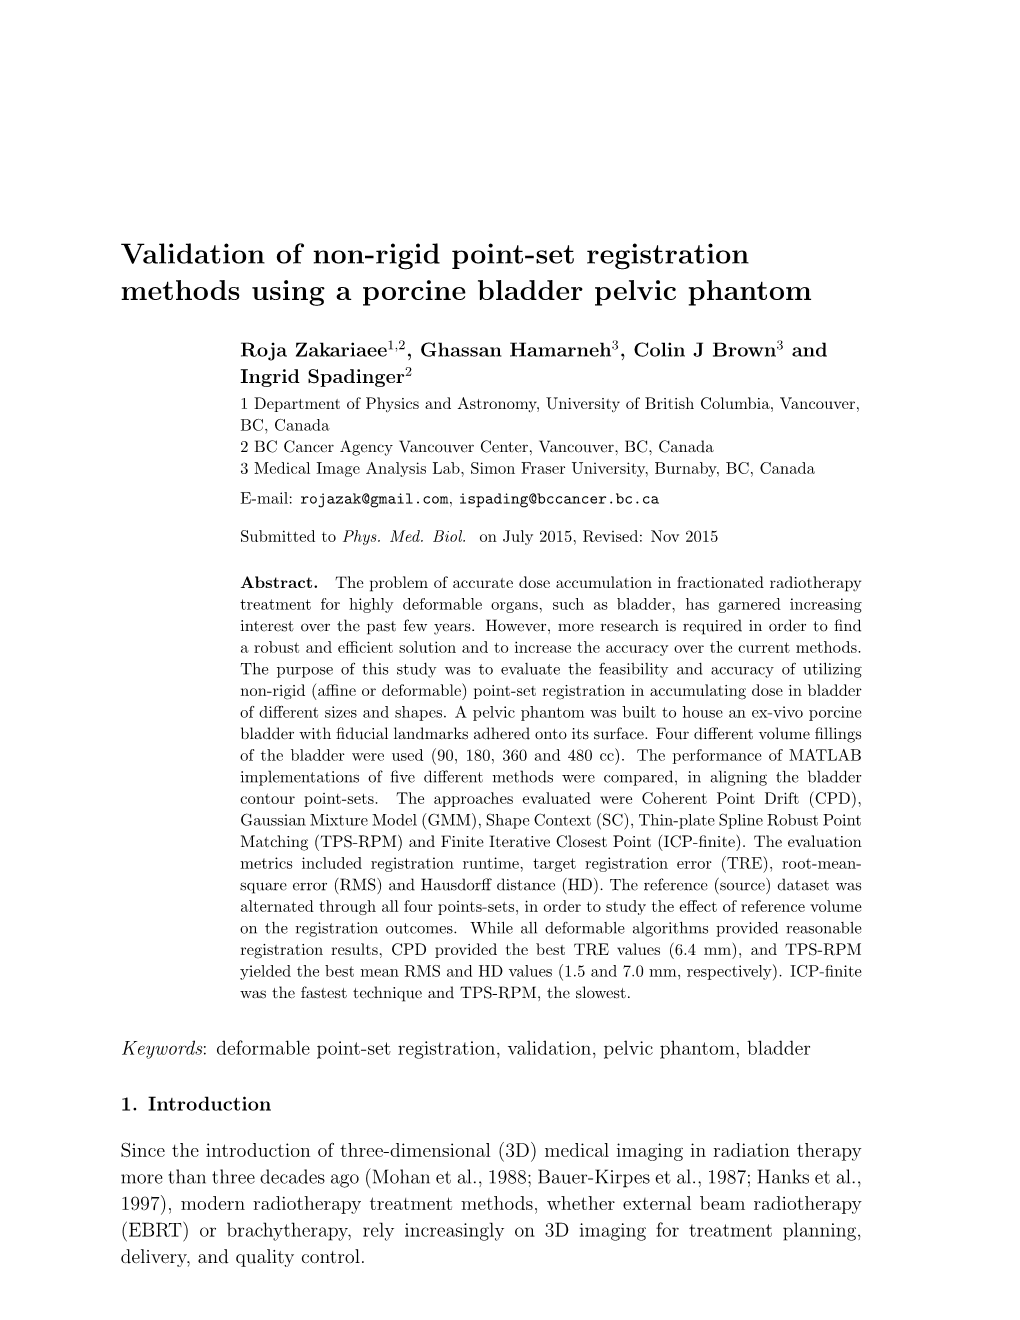 Validation of Non-Rigid Point-Set Registration Methods Using a Porcine Bladder Pelvic Phantom